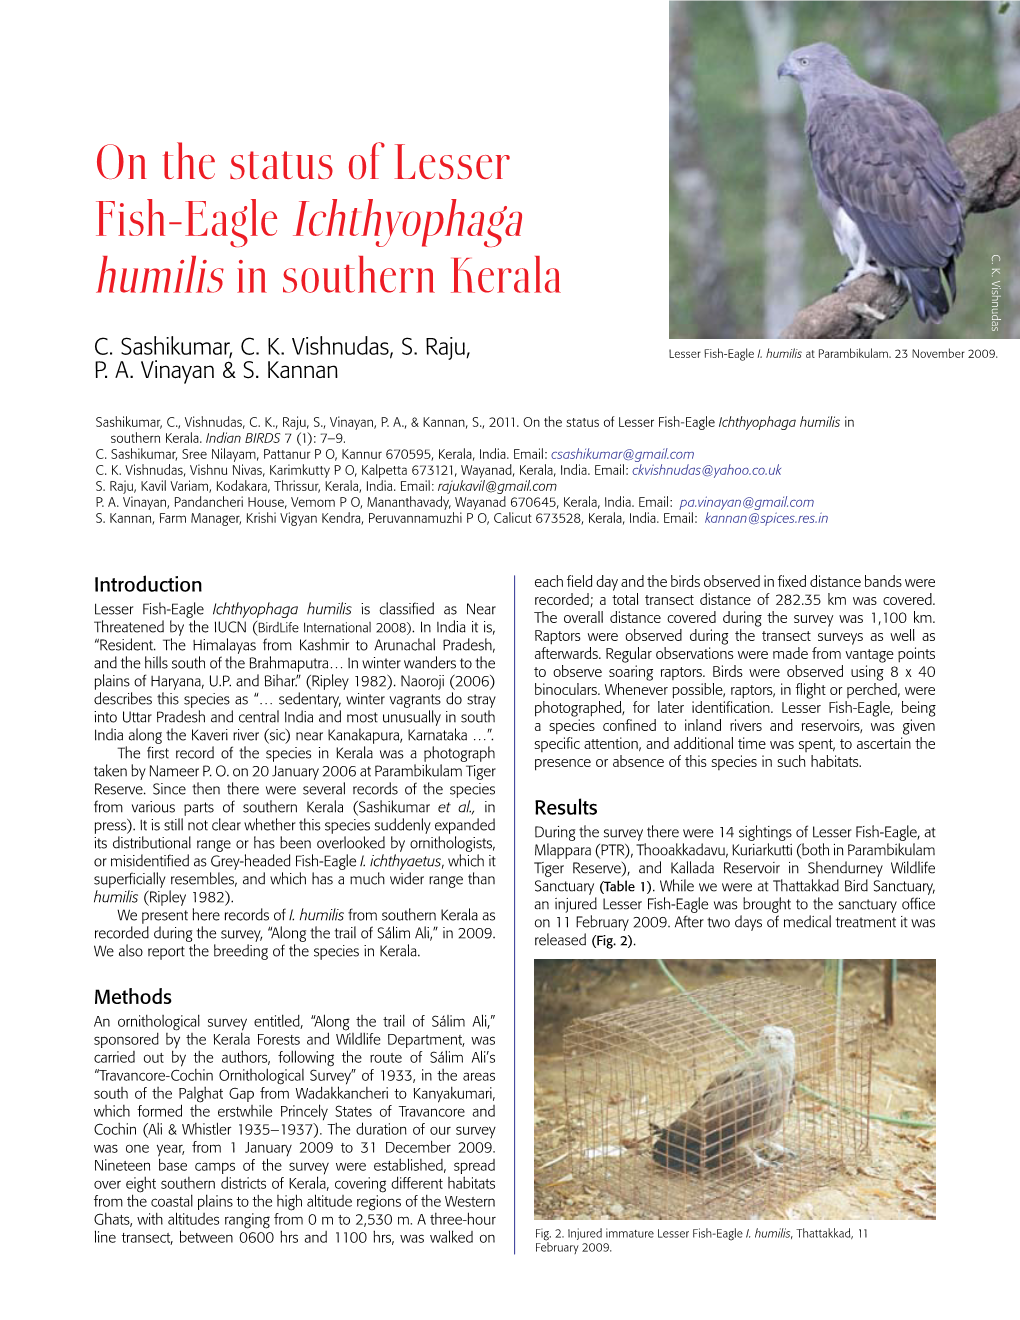 On the Status of Lesser Fish-Eagle Ichthyophaga Humilis in Southern Kerala Vishnudas K